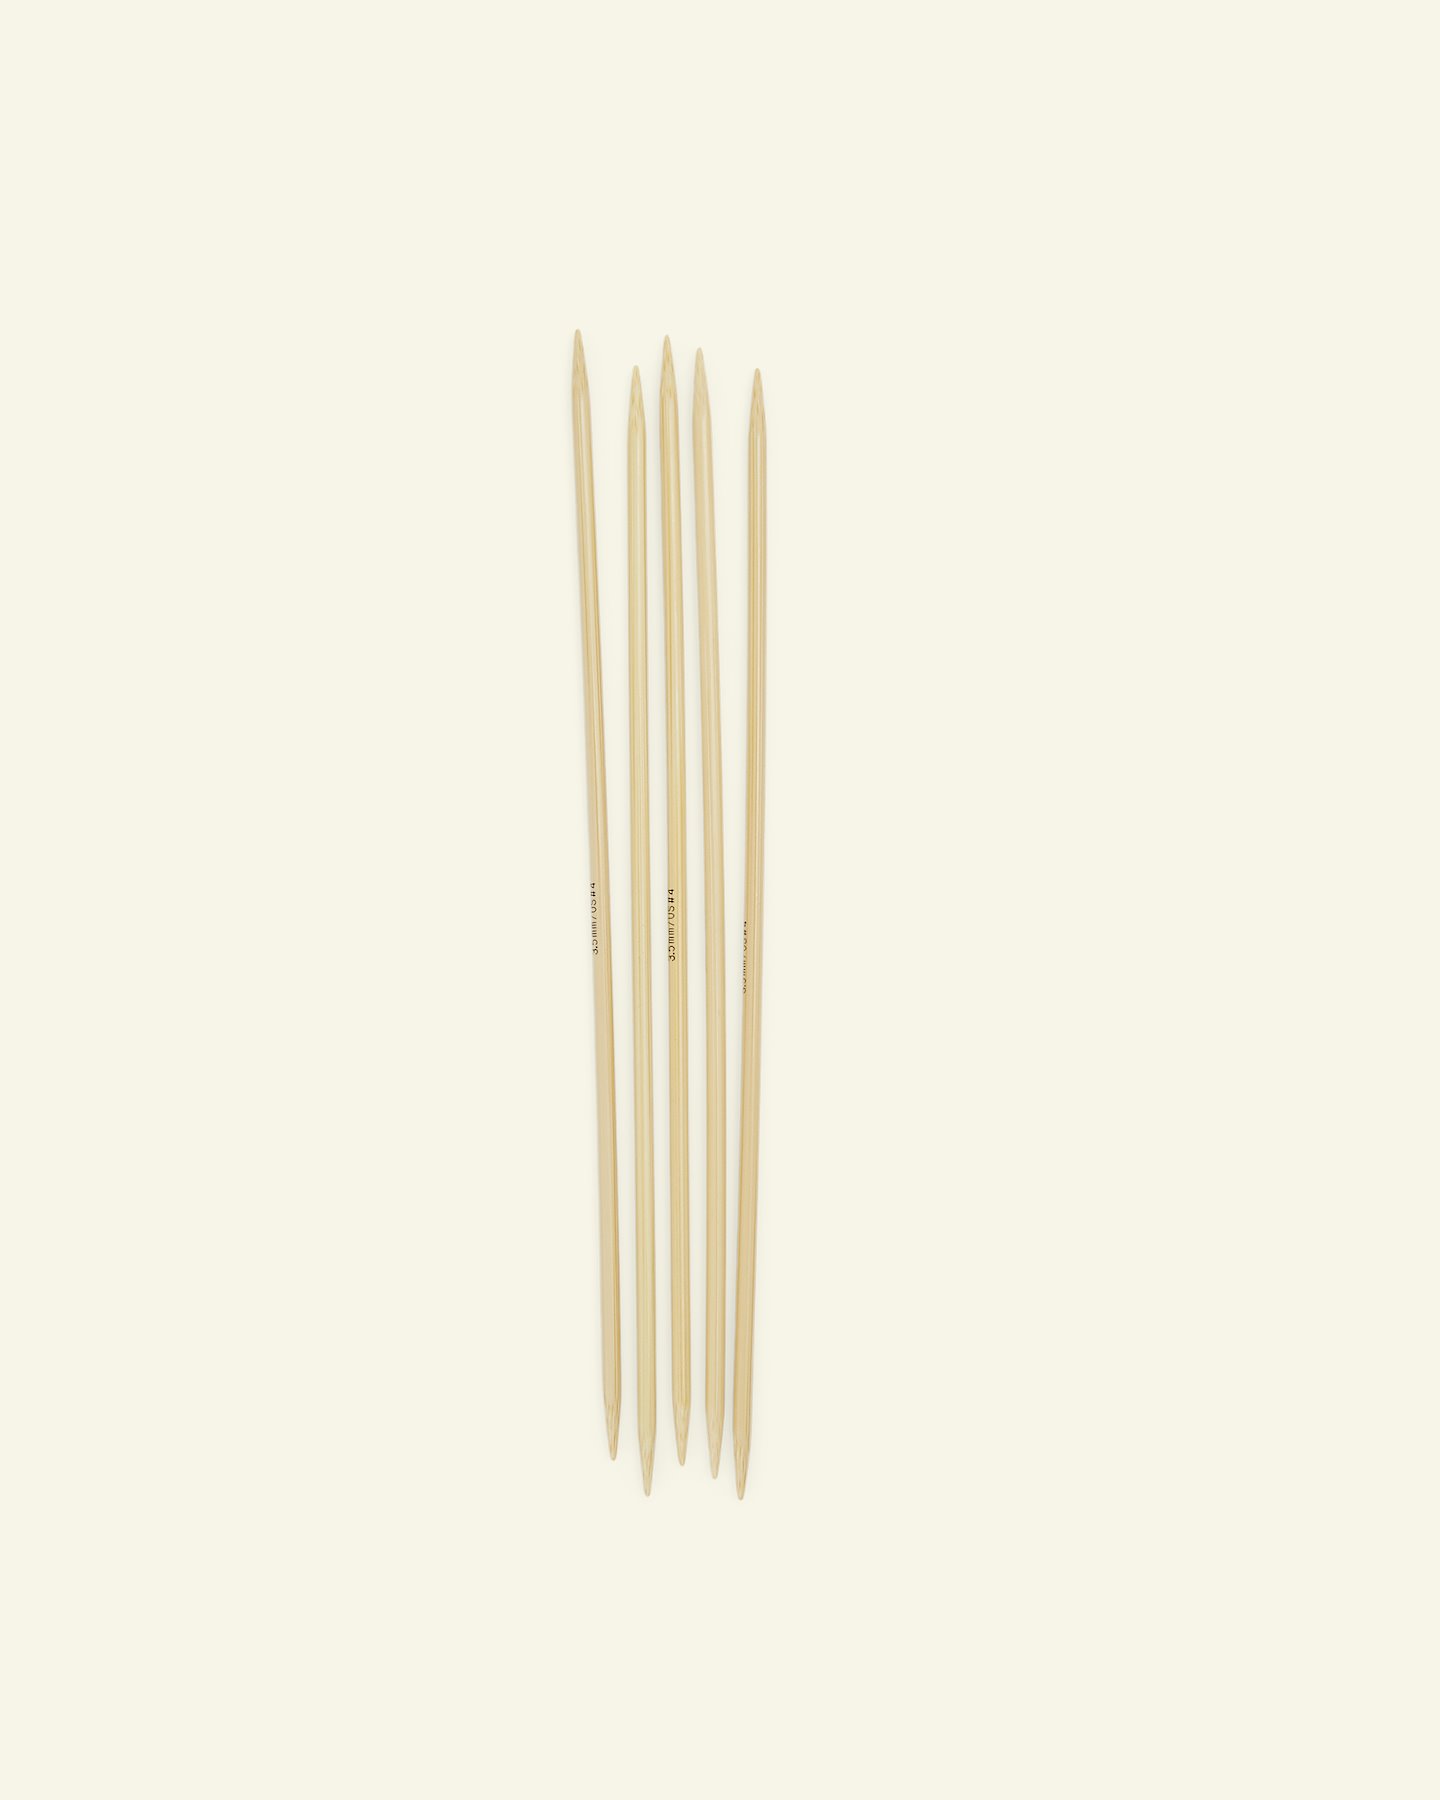 Addi strumpsticka bambu 20cm 3,5mm 83275_pack